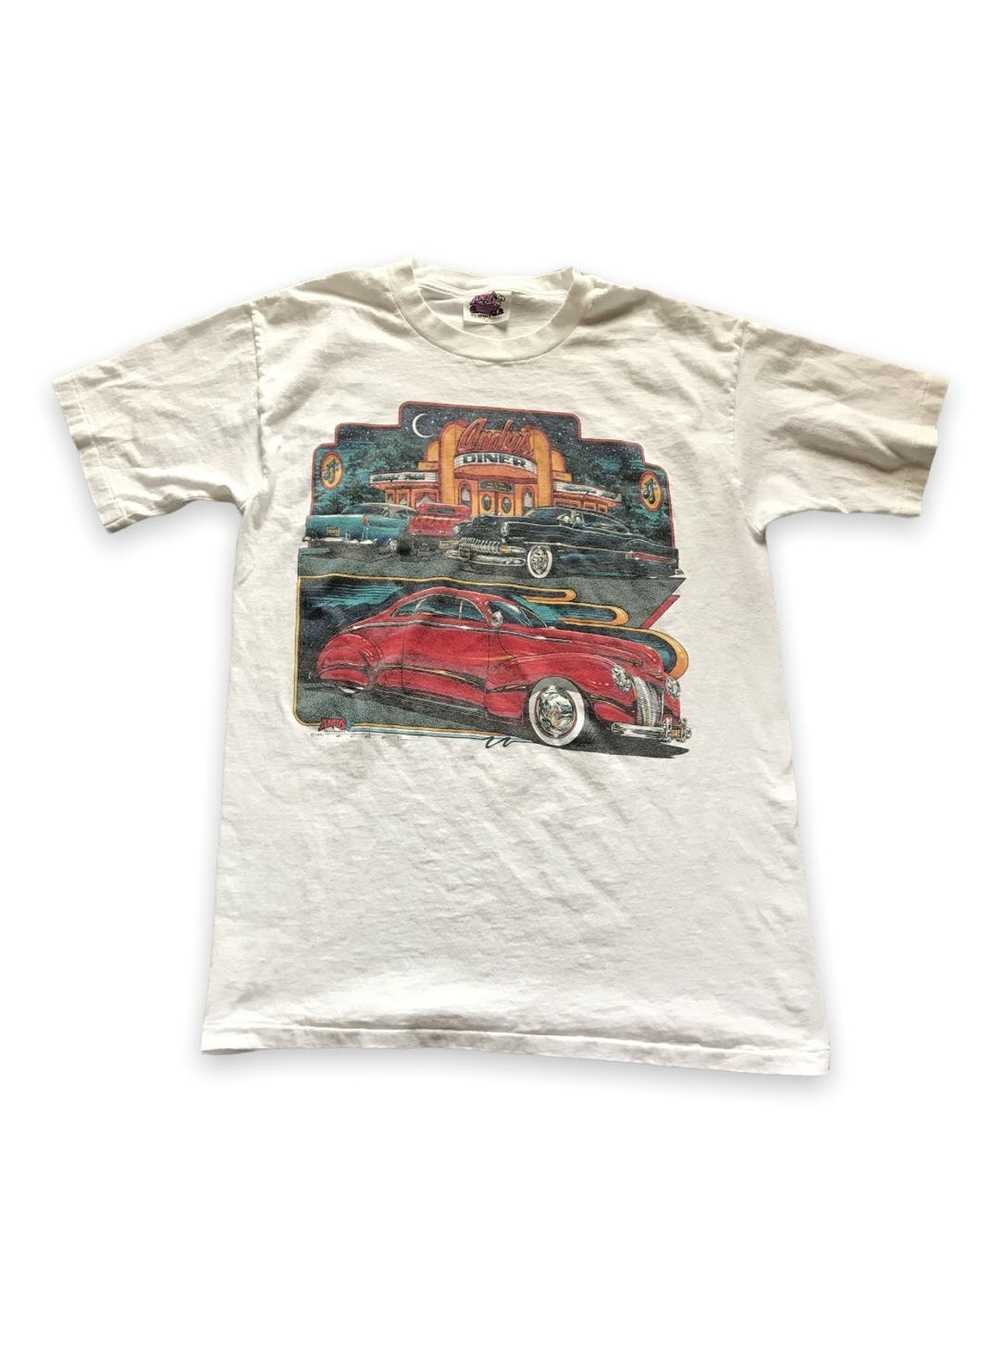 Vintage Andy’s classic car Tshirt - Gem